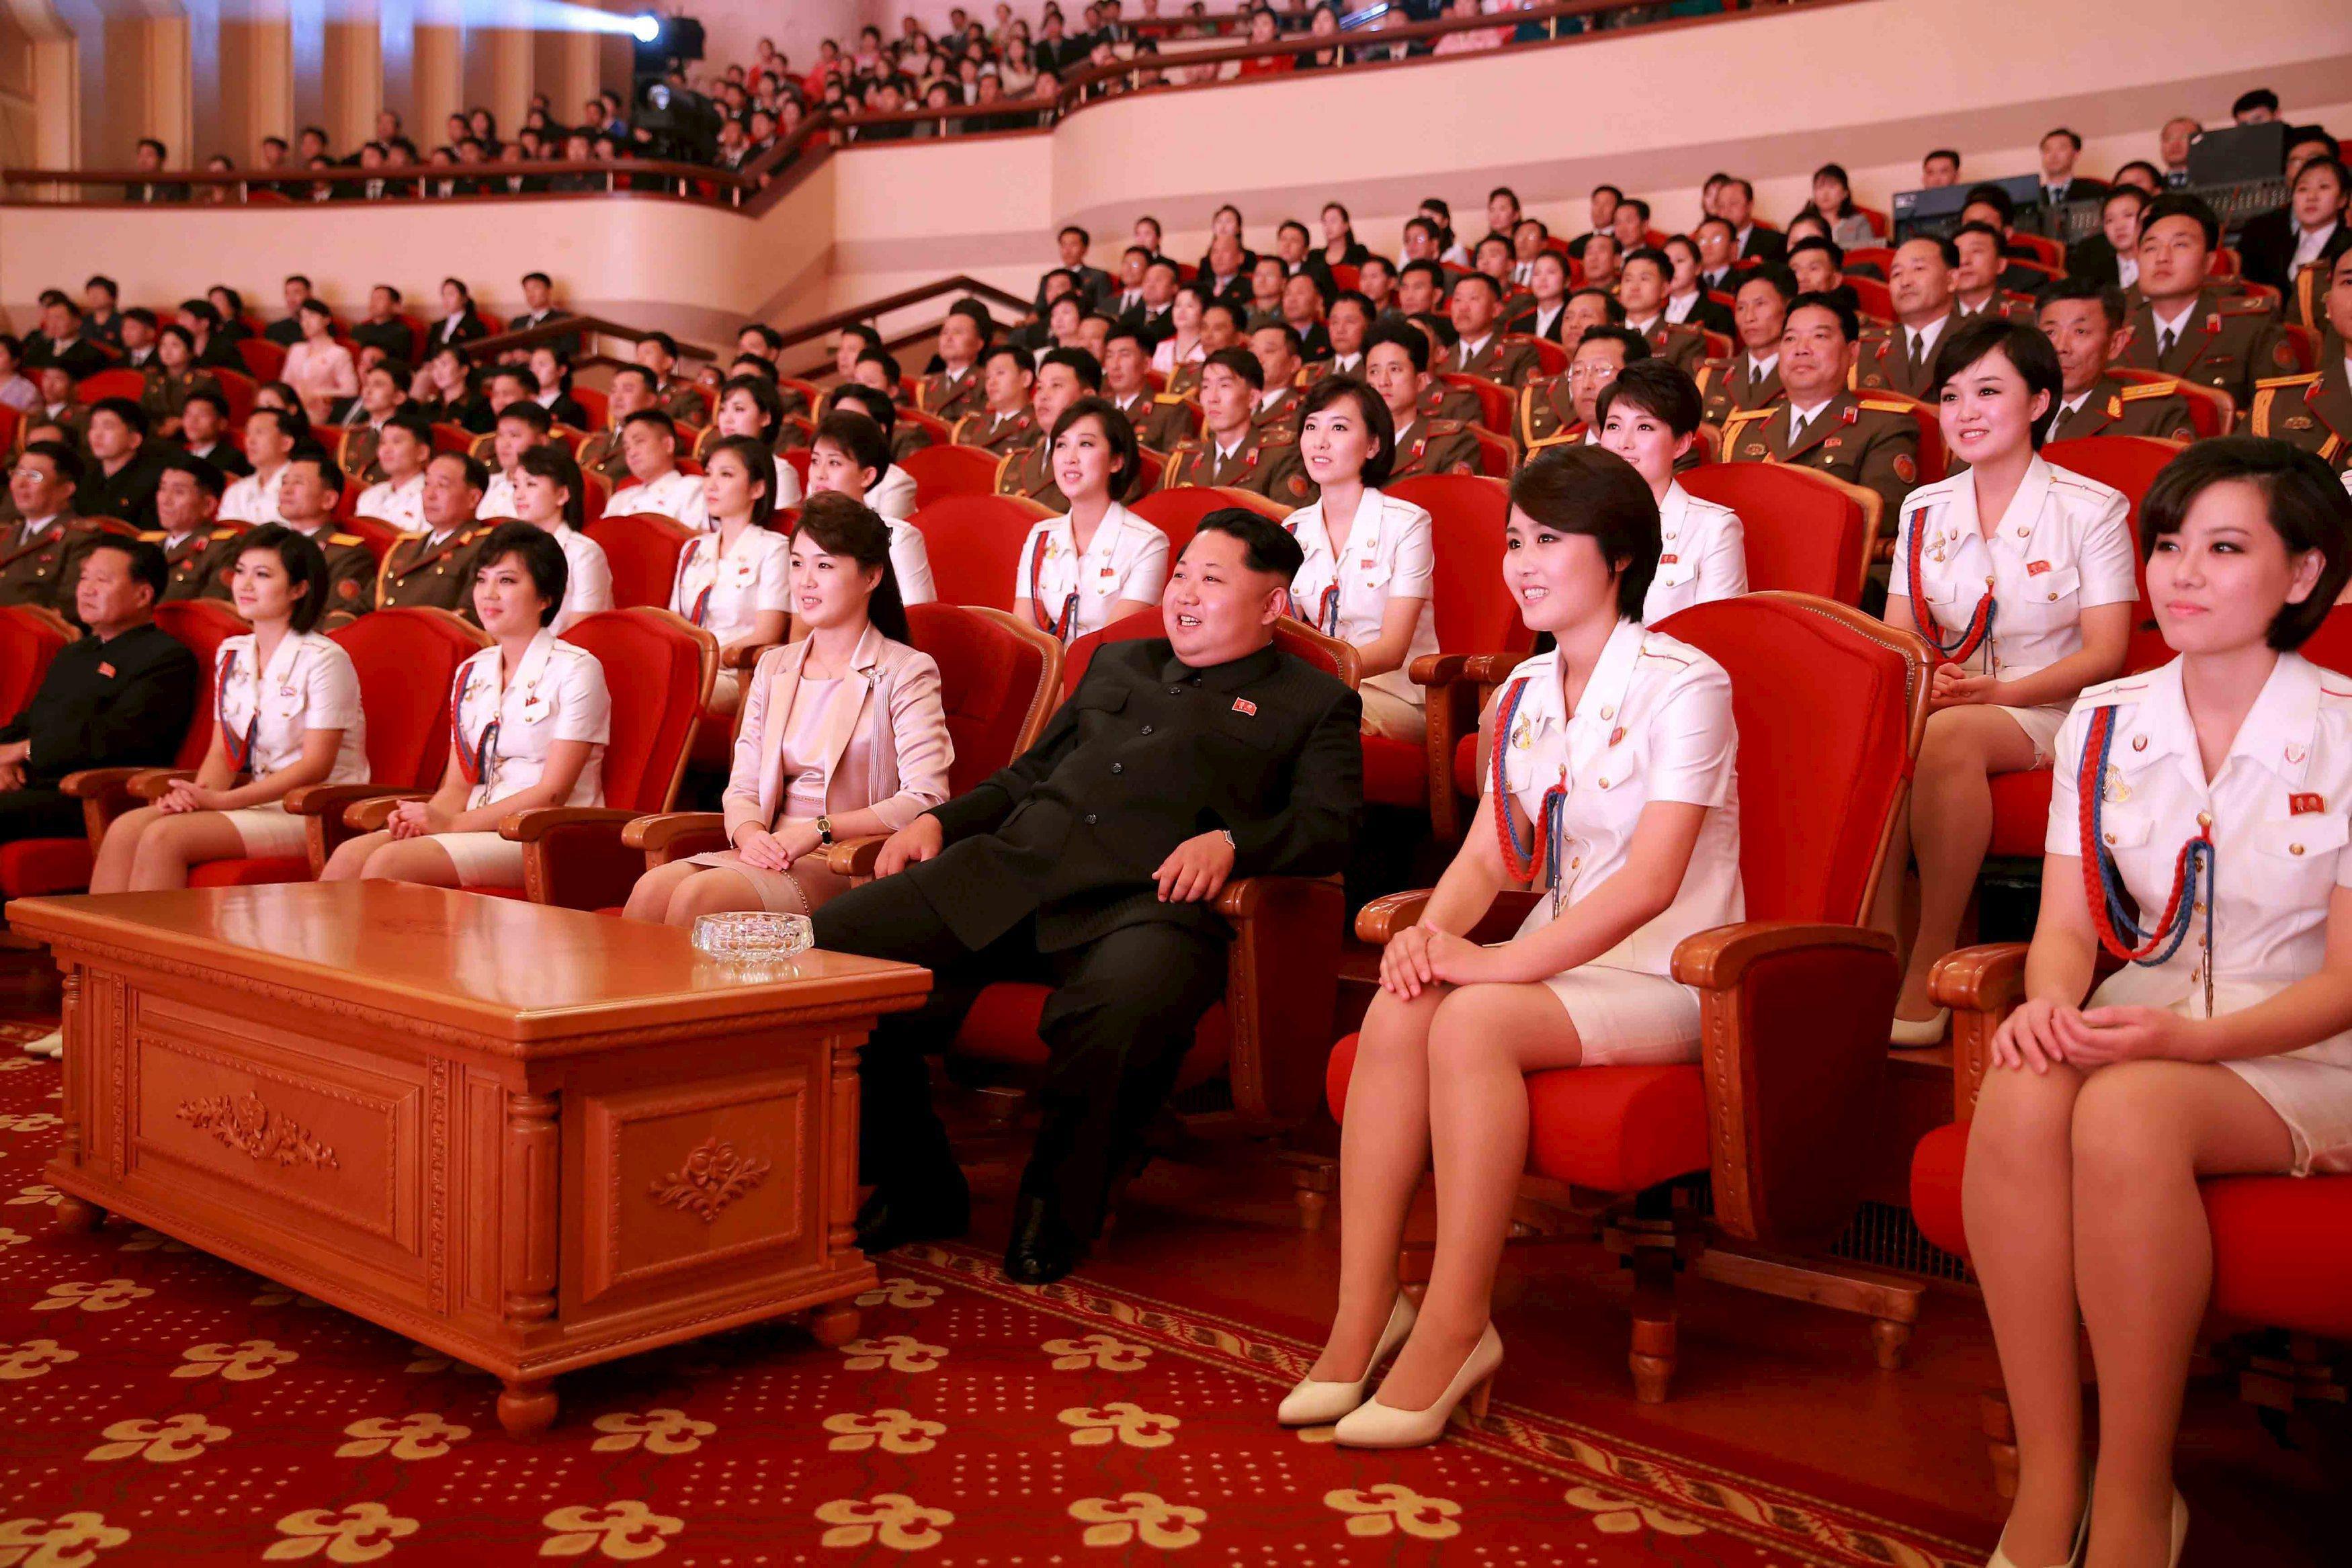 North Korean leader Kim Jong Un and wife Ri Sol Ju enjoy an art performance given by the Chongbong B